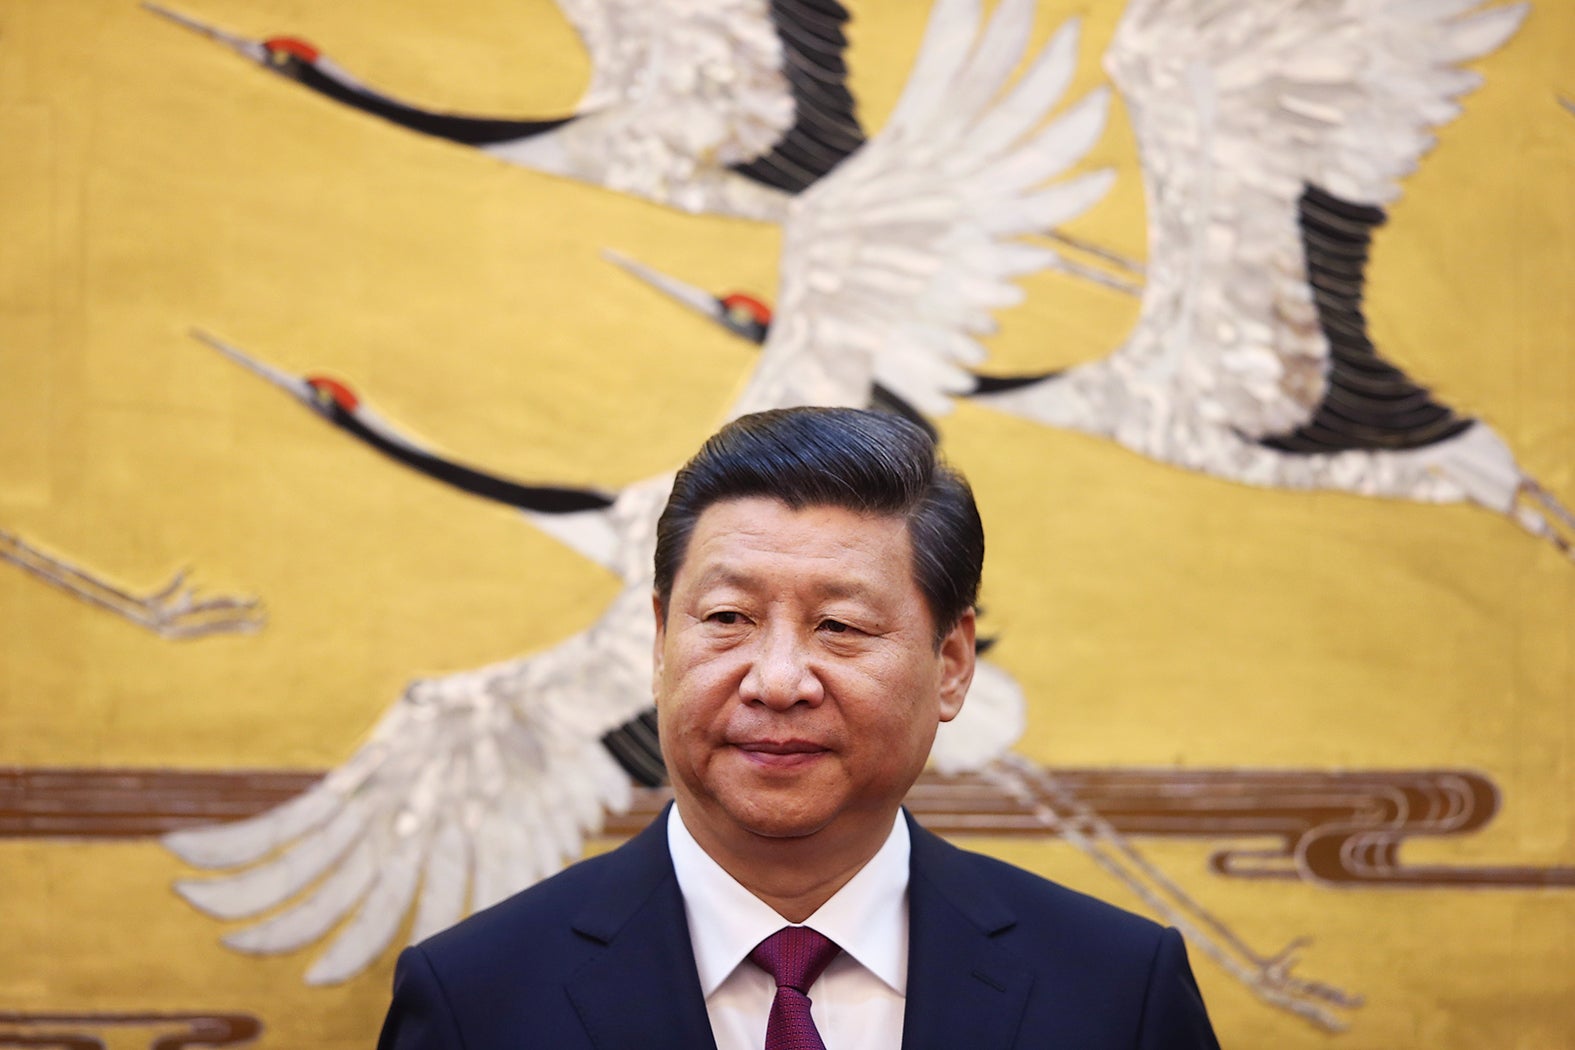 Xi Jinping could stop Putin's war in Ukraine. Will he?